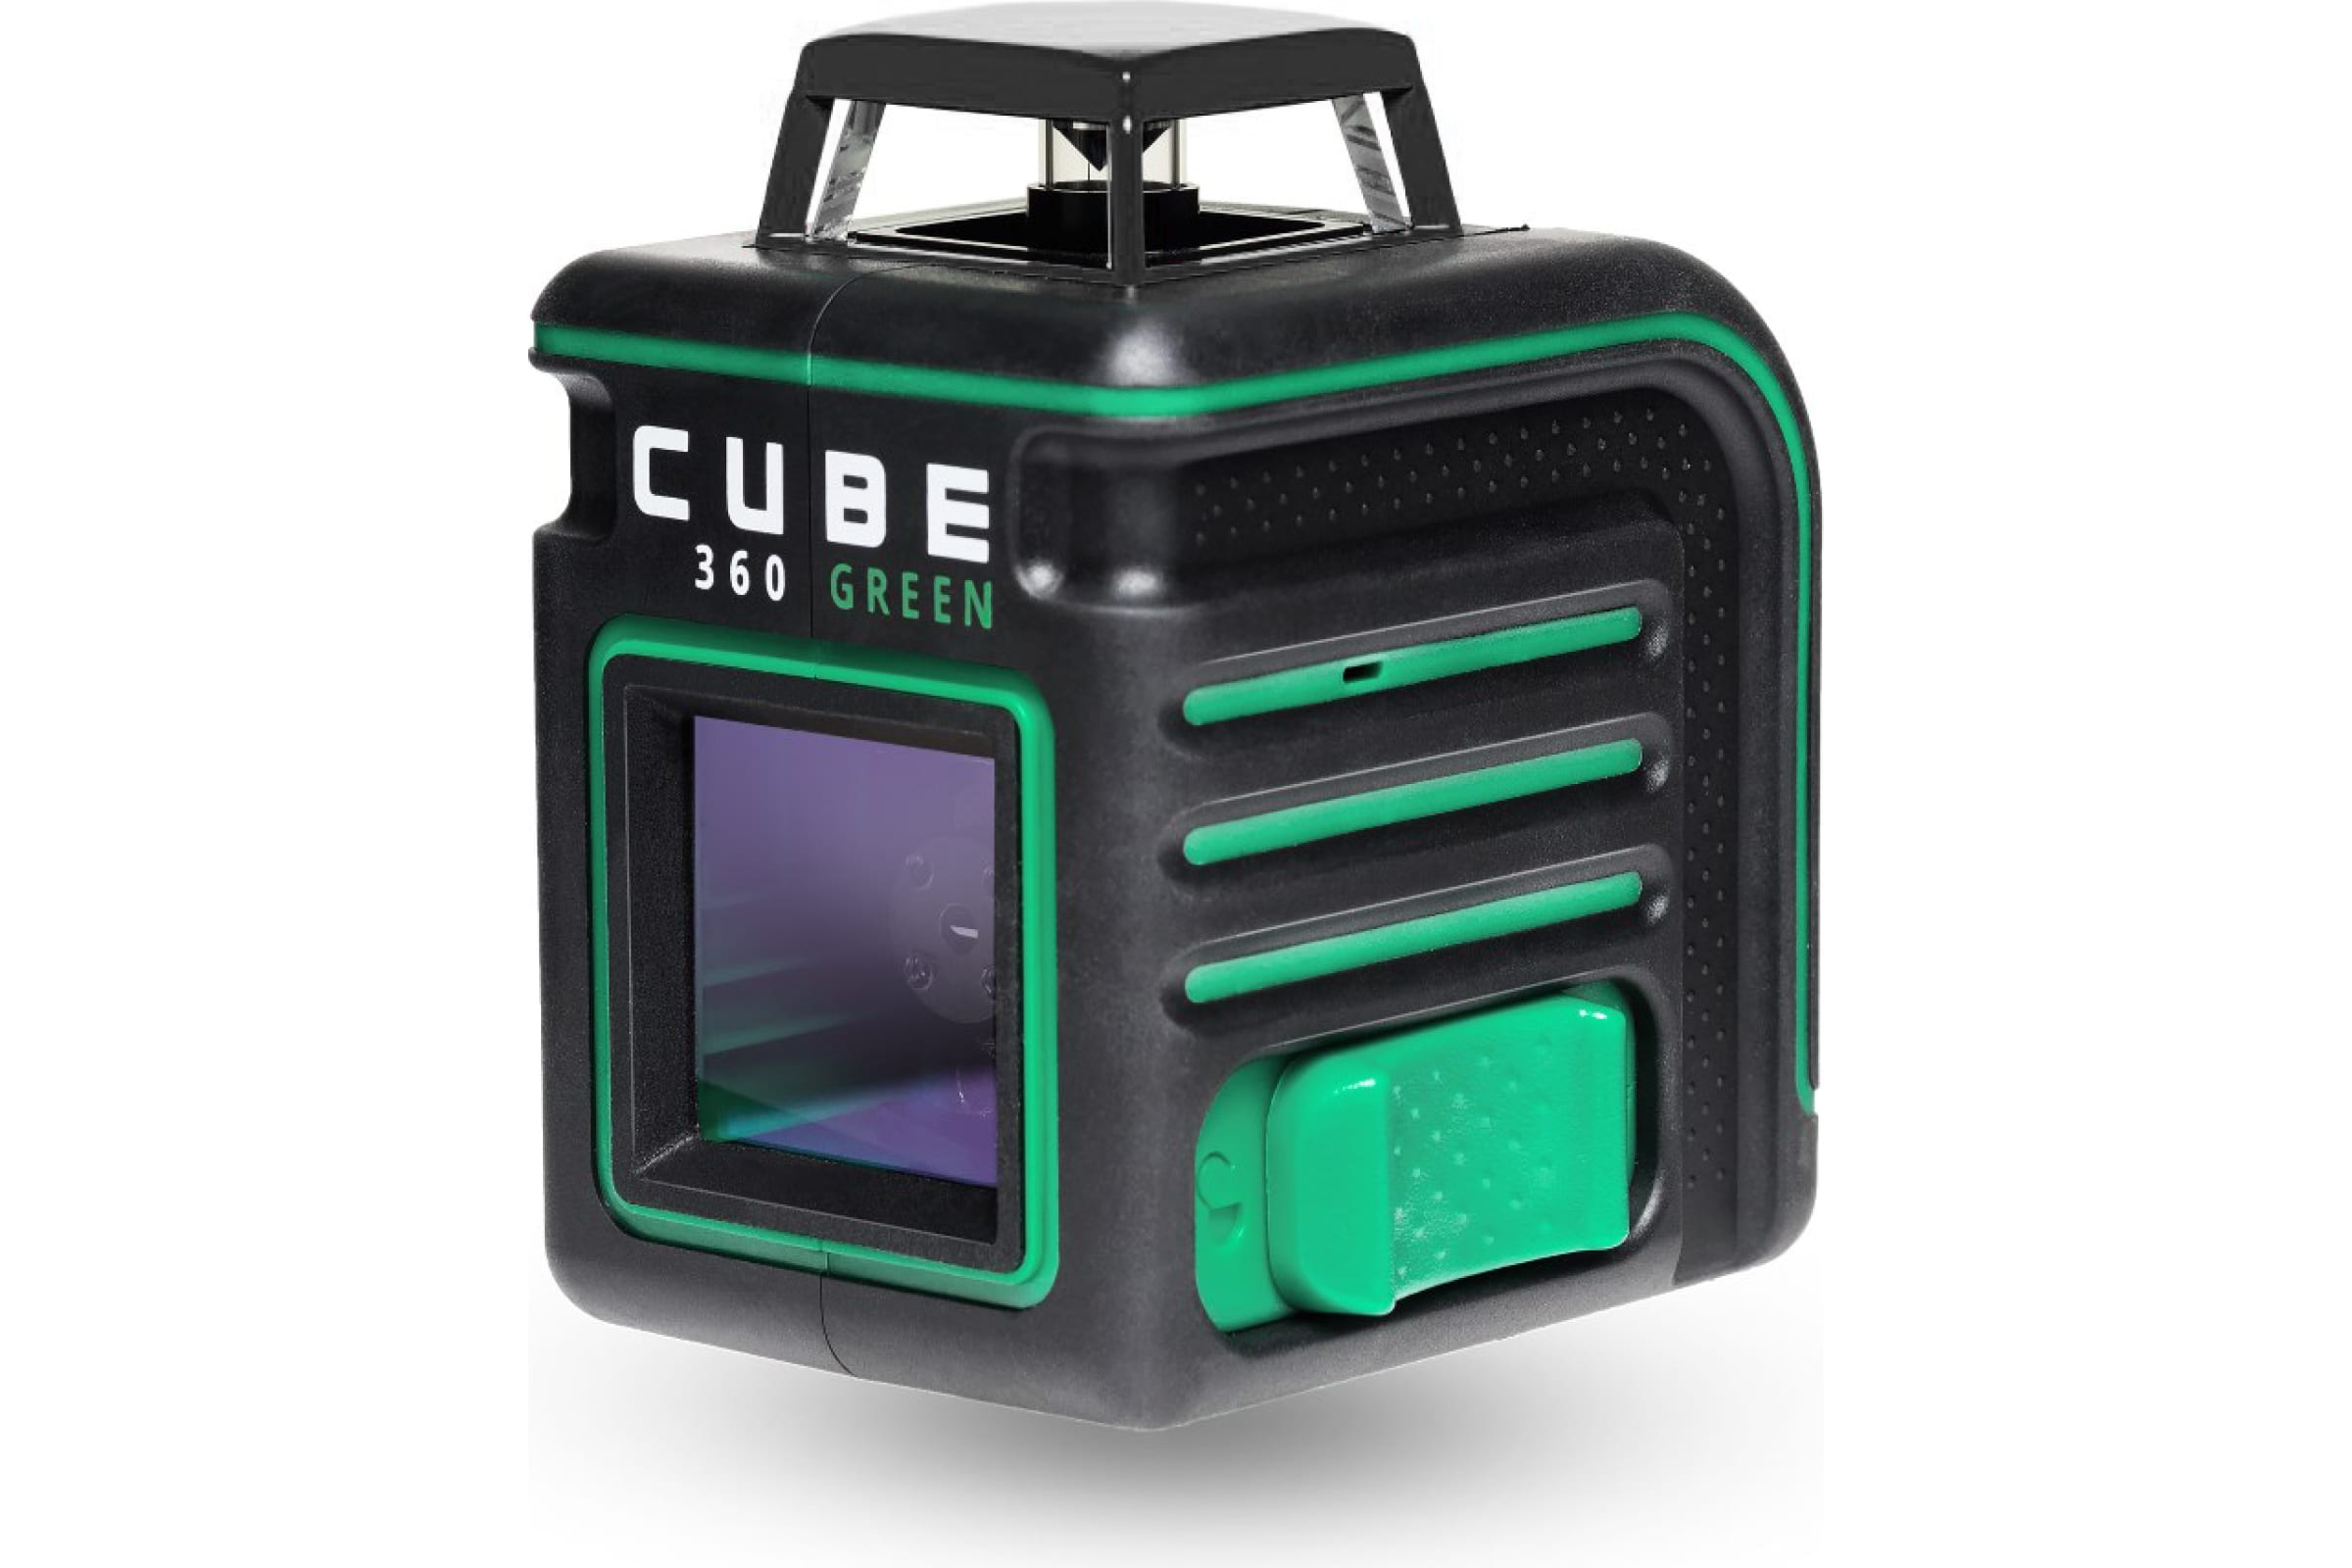 Cube 360 ultimate edition. Уровень лазерный ada Cube 3-360 Green Ultimate Edition. Лазерный уровень ada instruments Cube 3-360 Green Ultimate Edition (а00569). Лазерный уровень ada Cube 360 Basic Edition. Лазерный уровень ada Cube 3-360 Green Basic Editio.